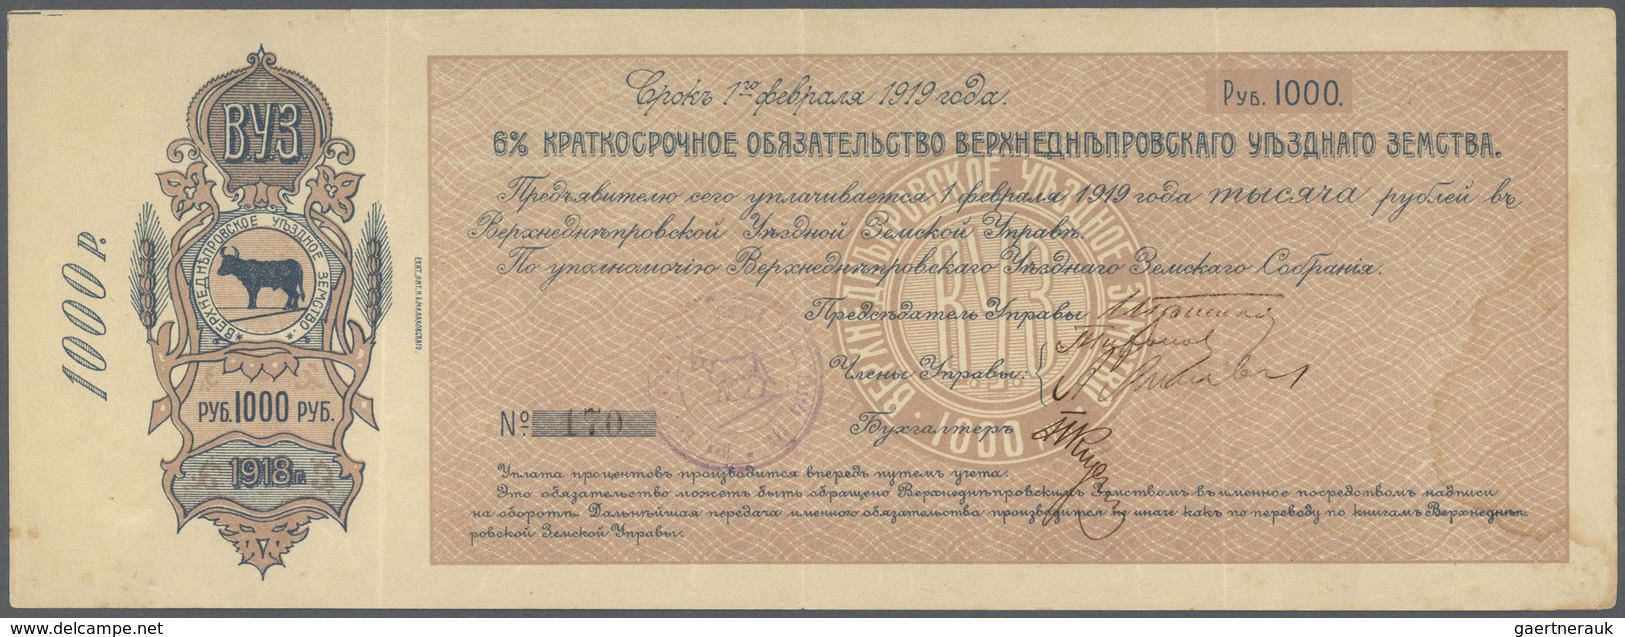 Ukraina / Ukraine: Verhnedniprovske County Council (Верхнеднпровское  Уздное  Земствo), 1000 Rubles - Ukraine